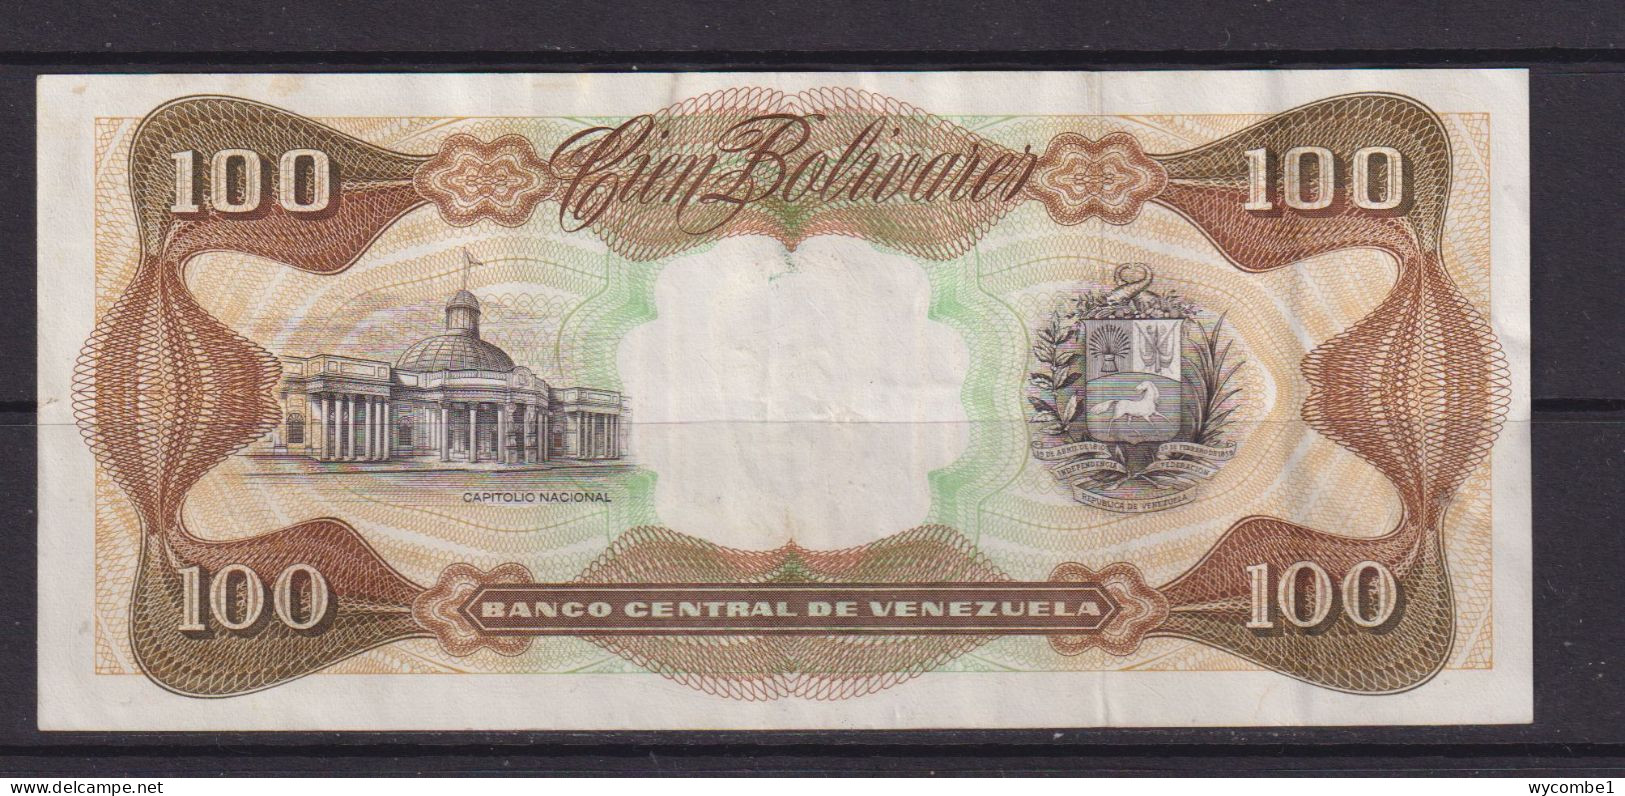 VENEZUELA -  1992 100 Bolivares Circulated Banknote - Venezuela